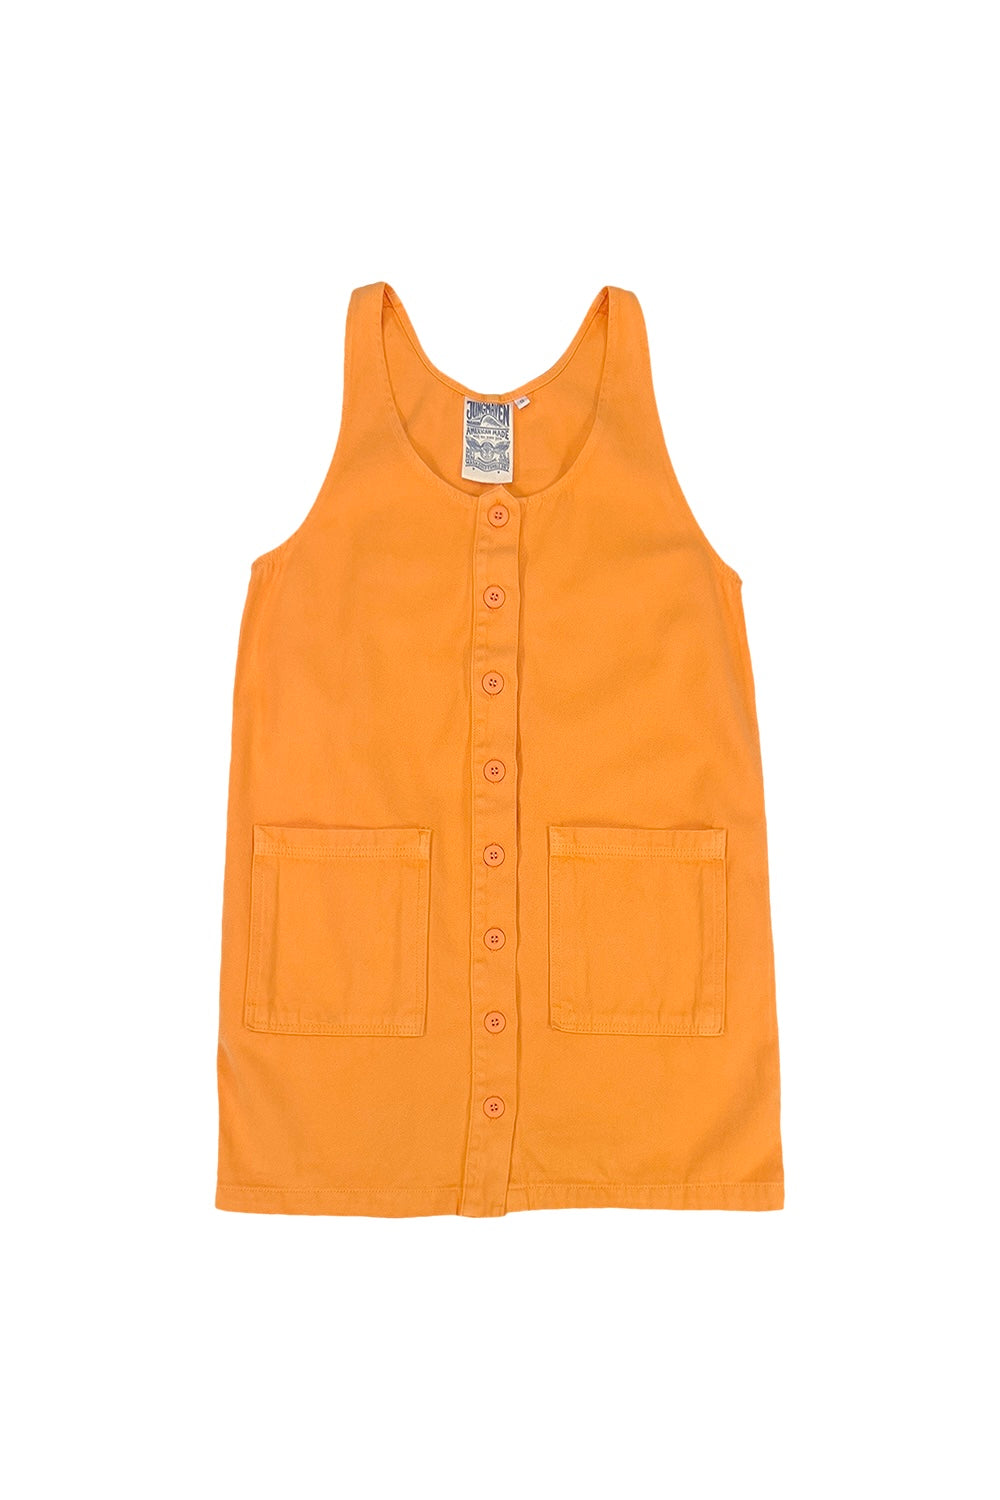 Jumper Dress | Jungmaven Hemp Clothing & Accessories / Color: Apricot Crush